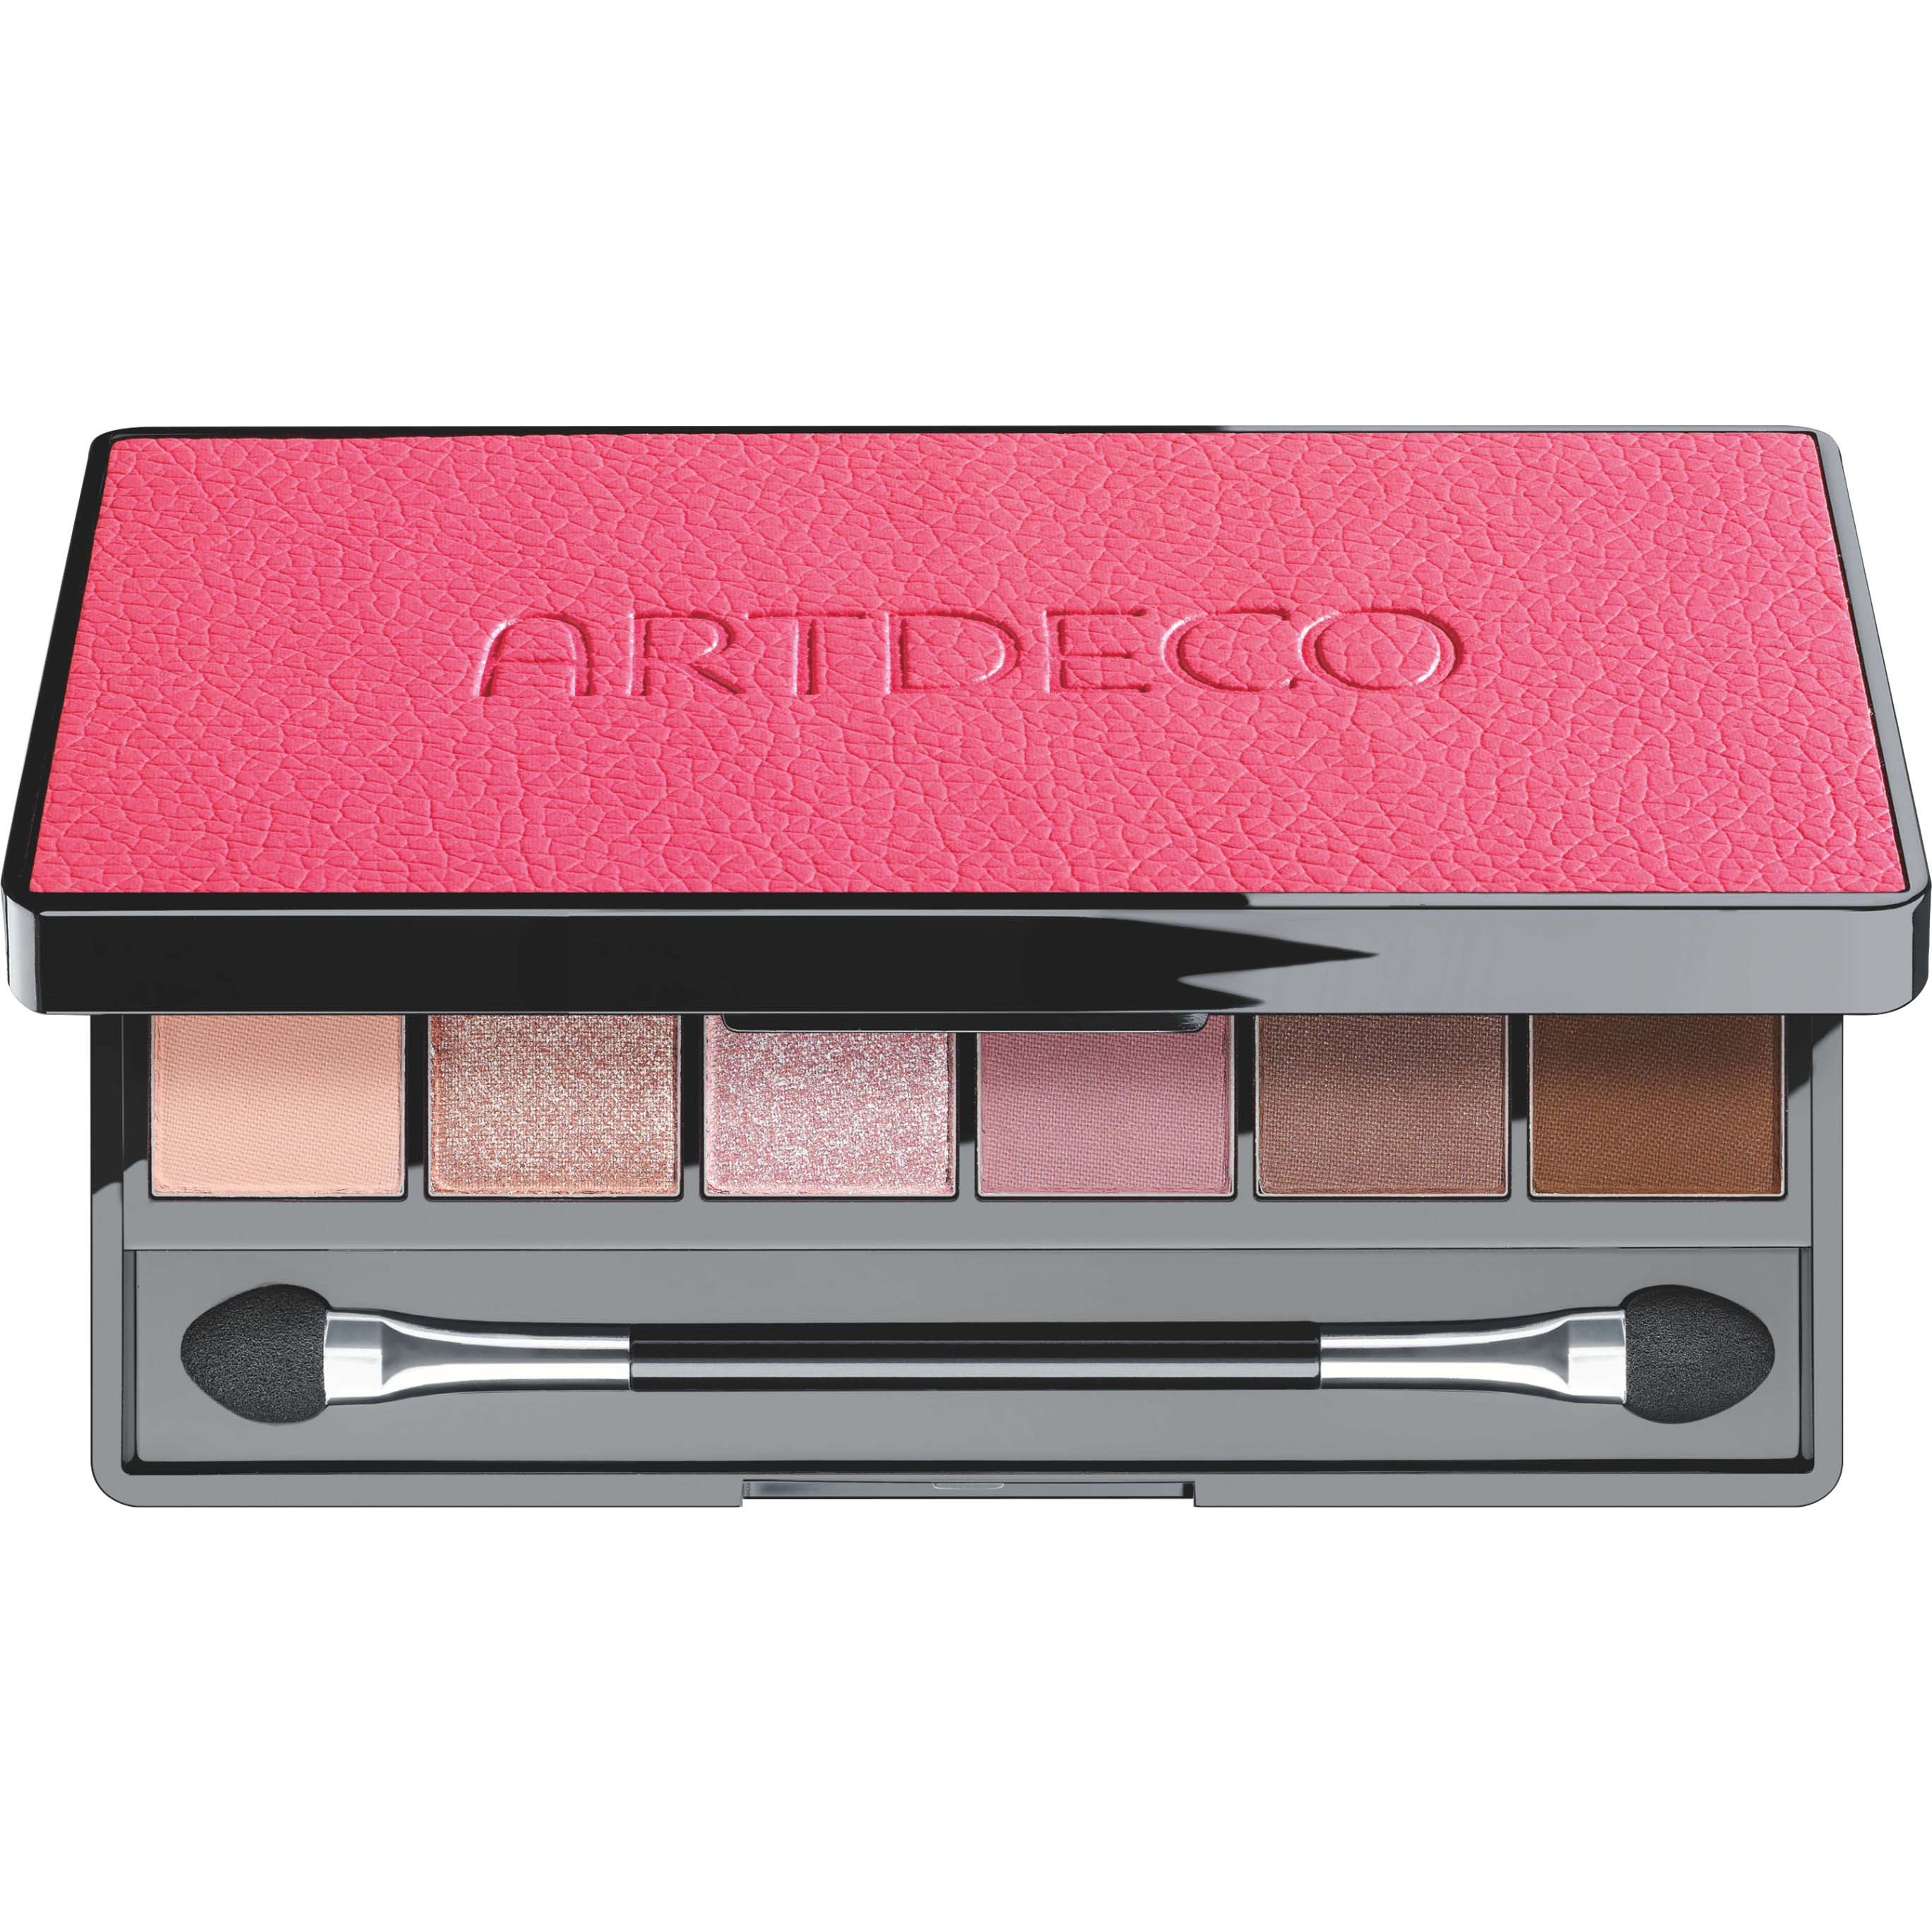 Artdeco Iconic Eyeshadow Palette 2 Garden Of Delights